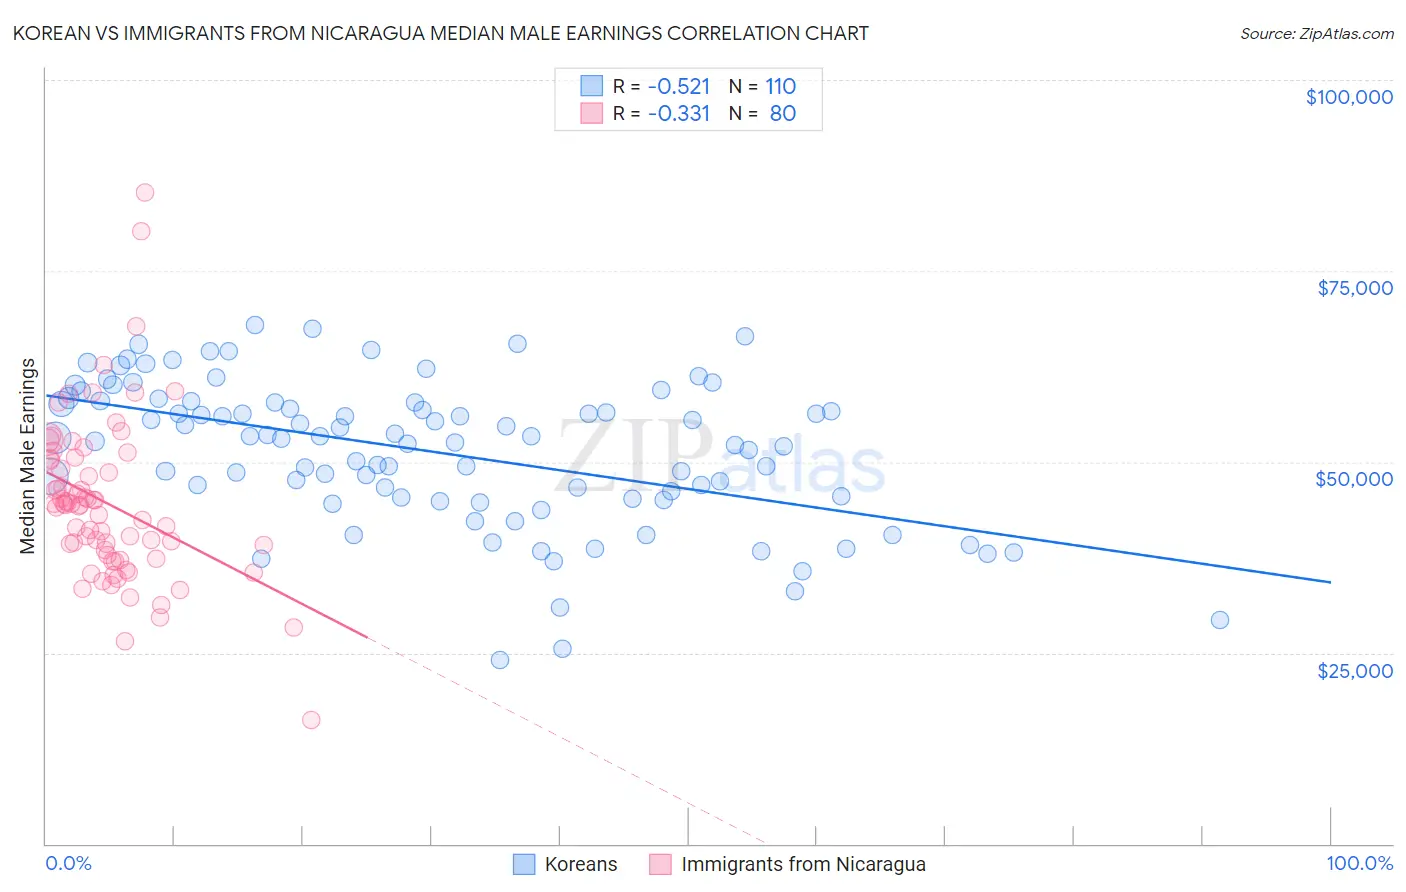 Korean vs Immigrants from Nicaragua Median Male Earnings